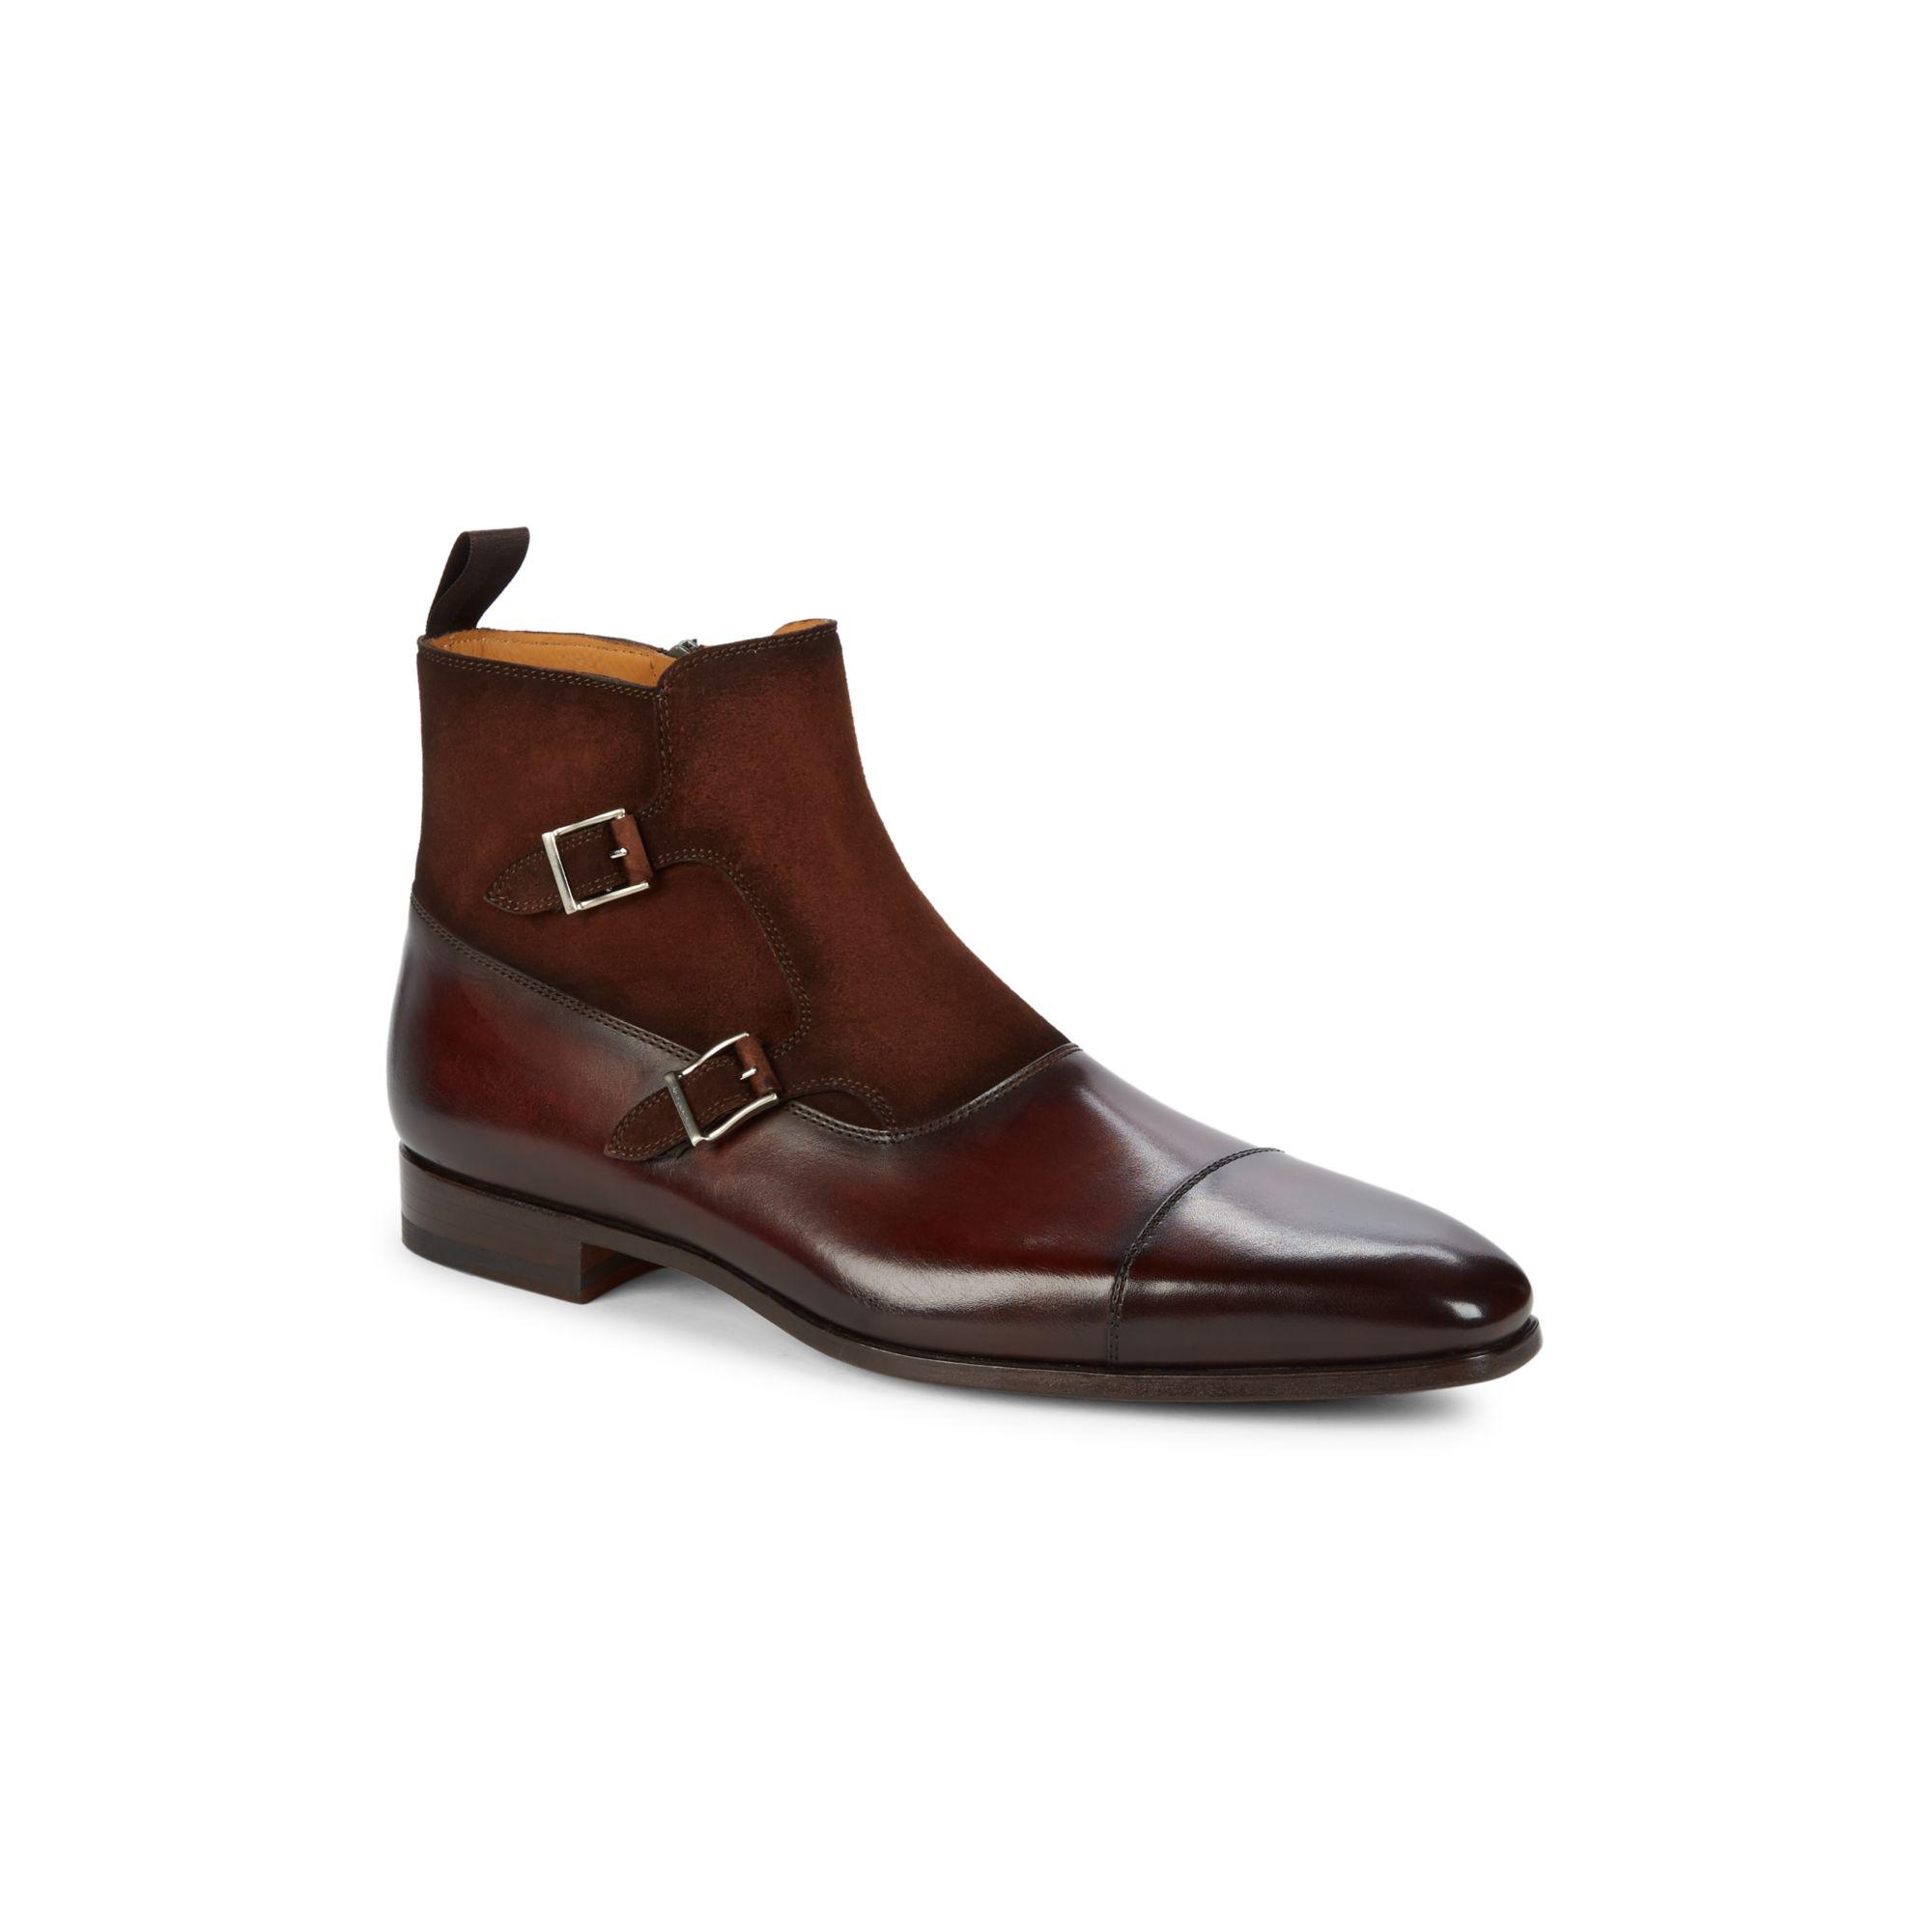 Monk Strap Sophistication: Magnanni Leather Monk Strap Boots